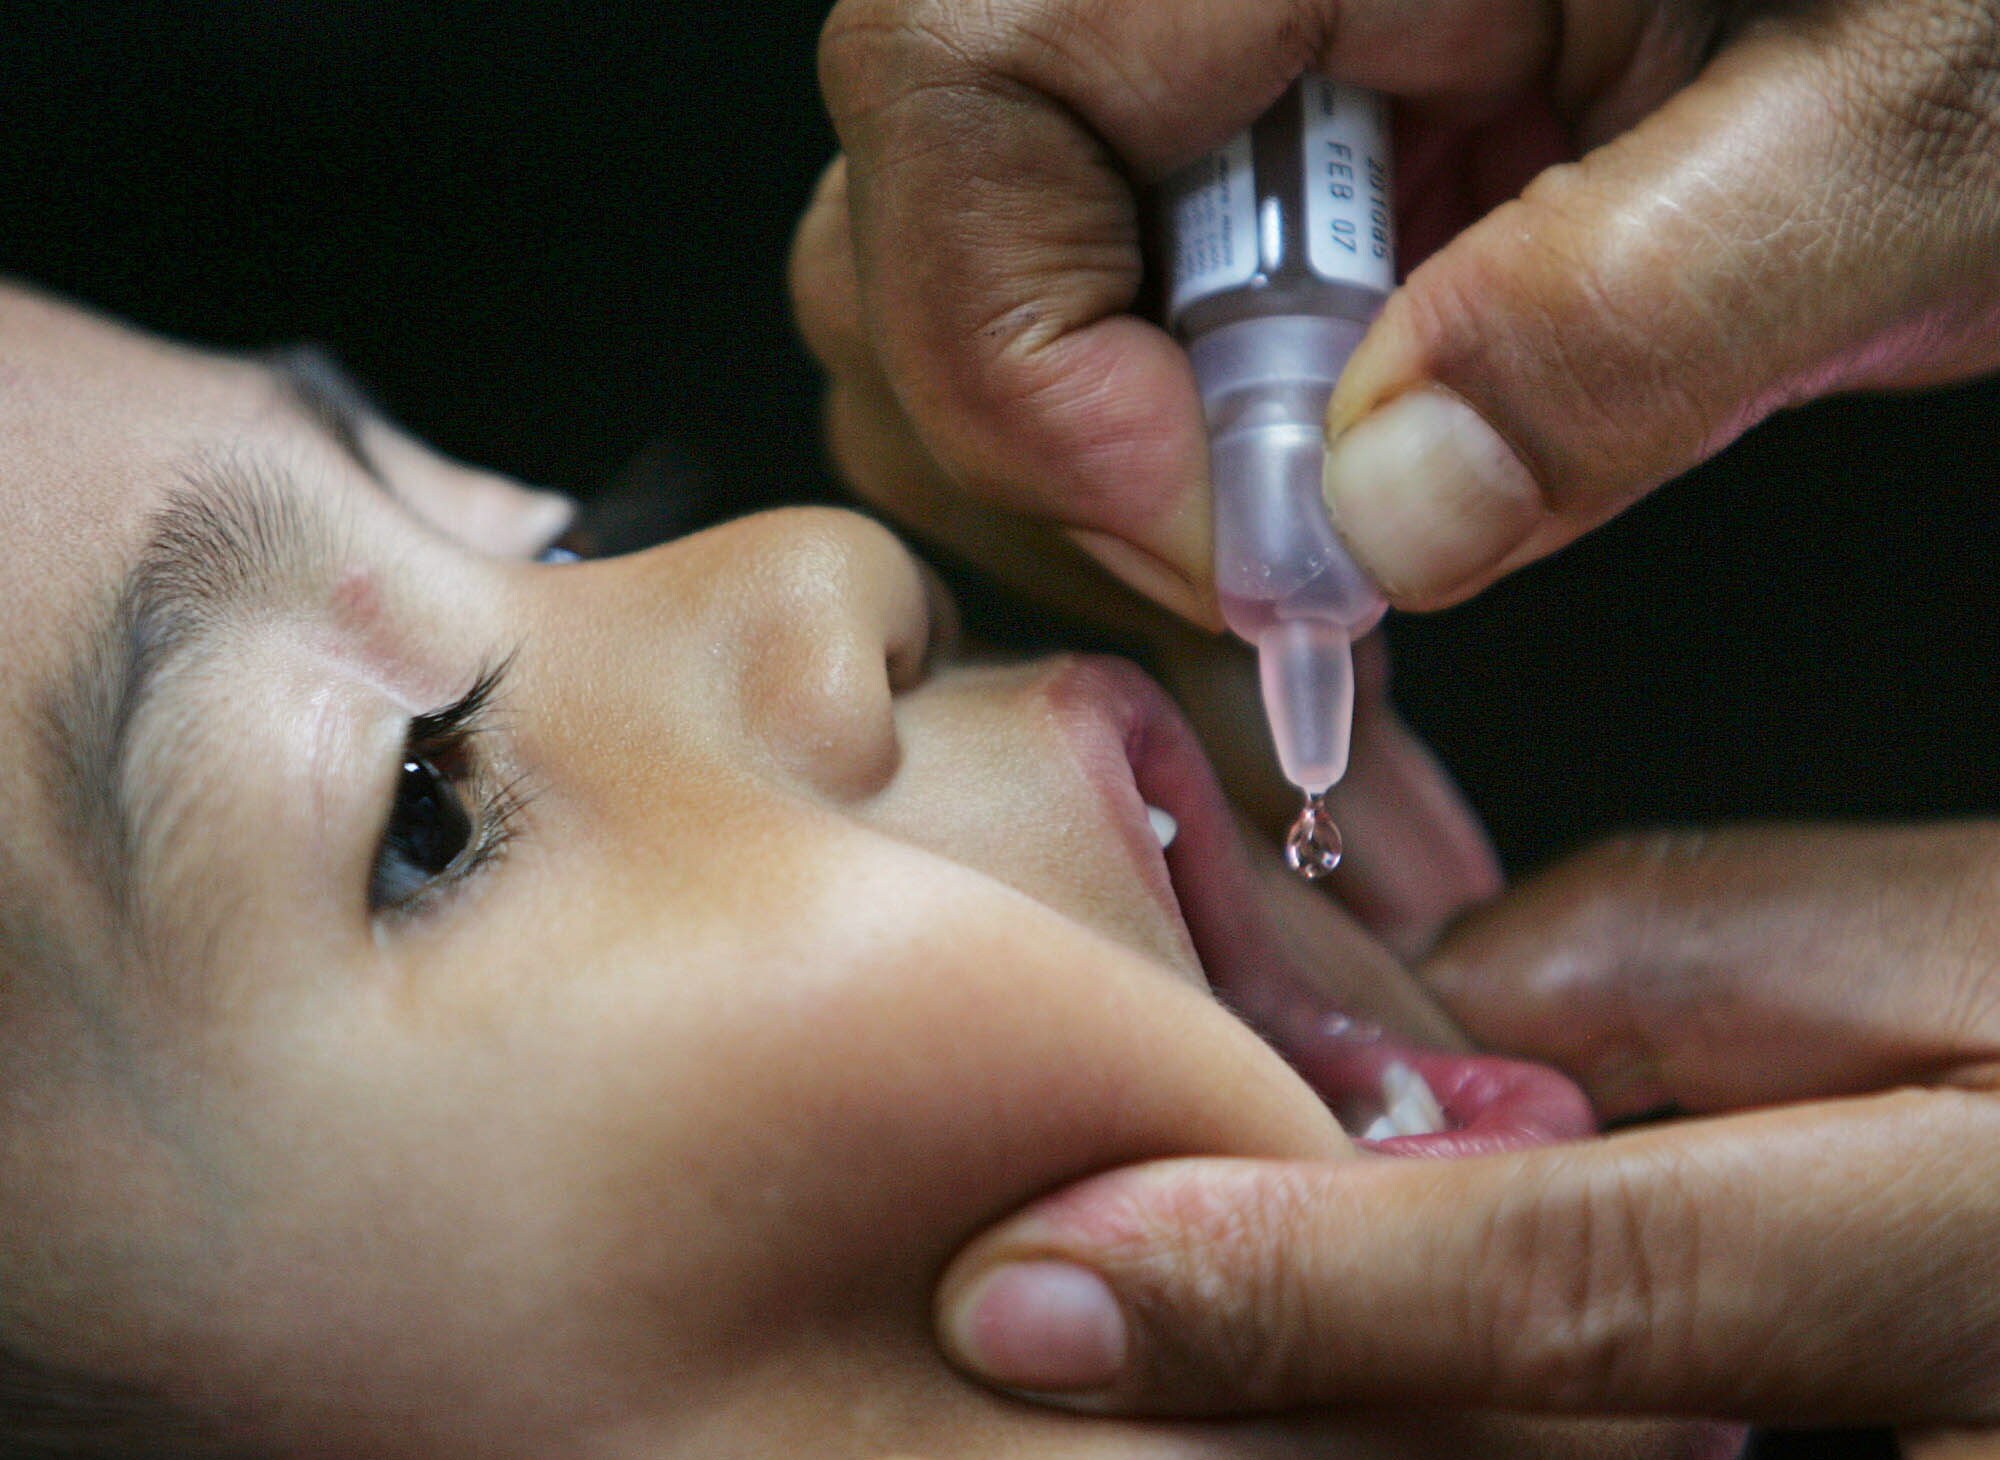 Un niño recibe una vacuna bebible./